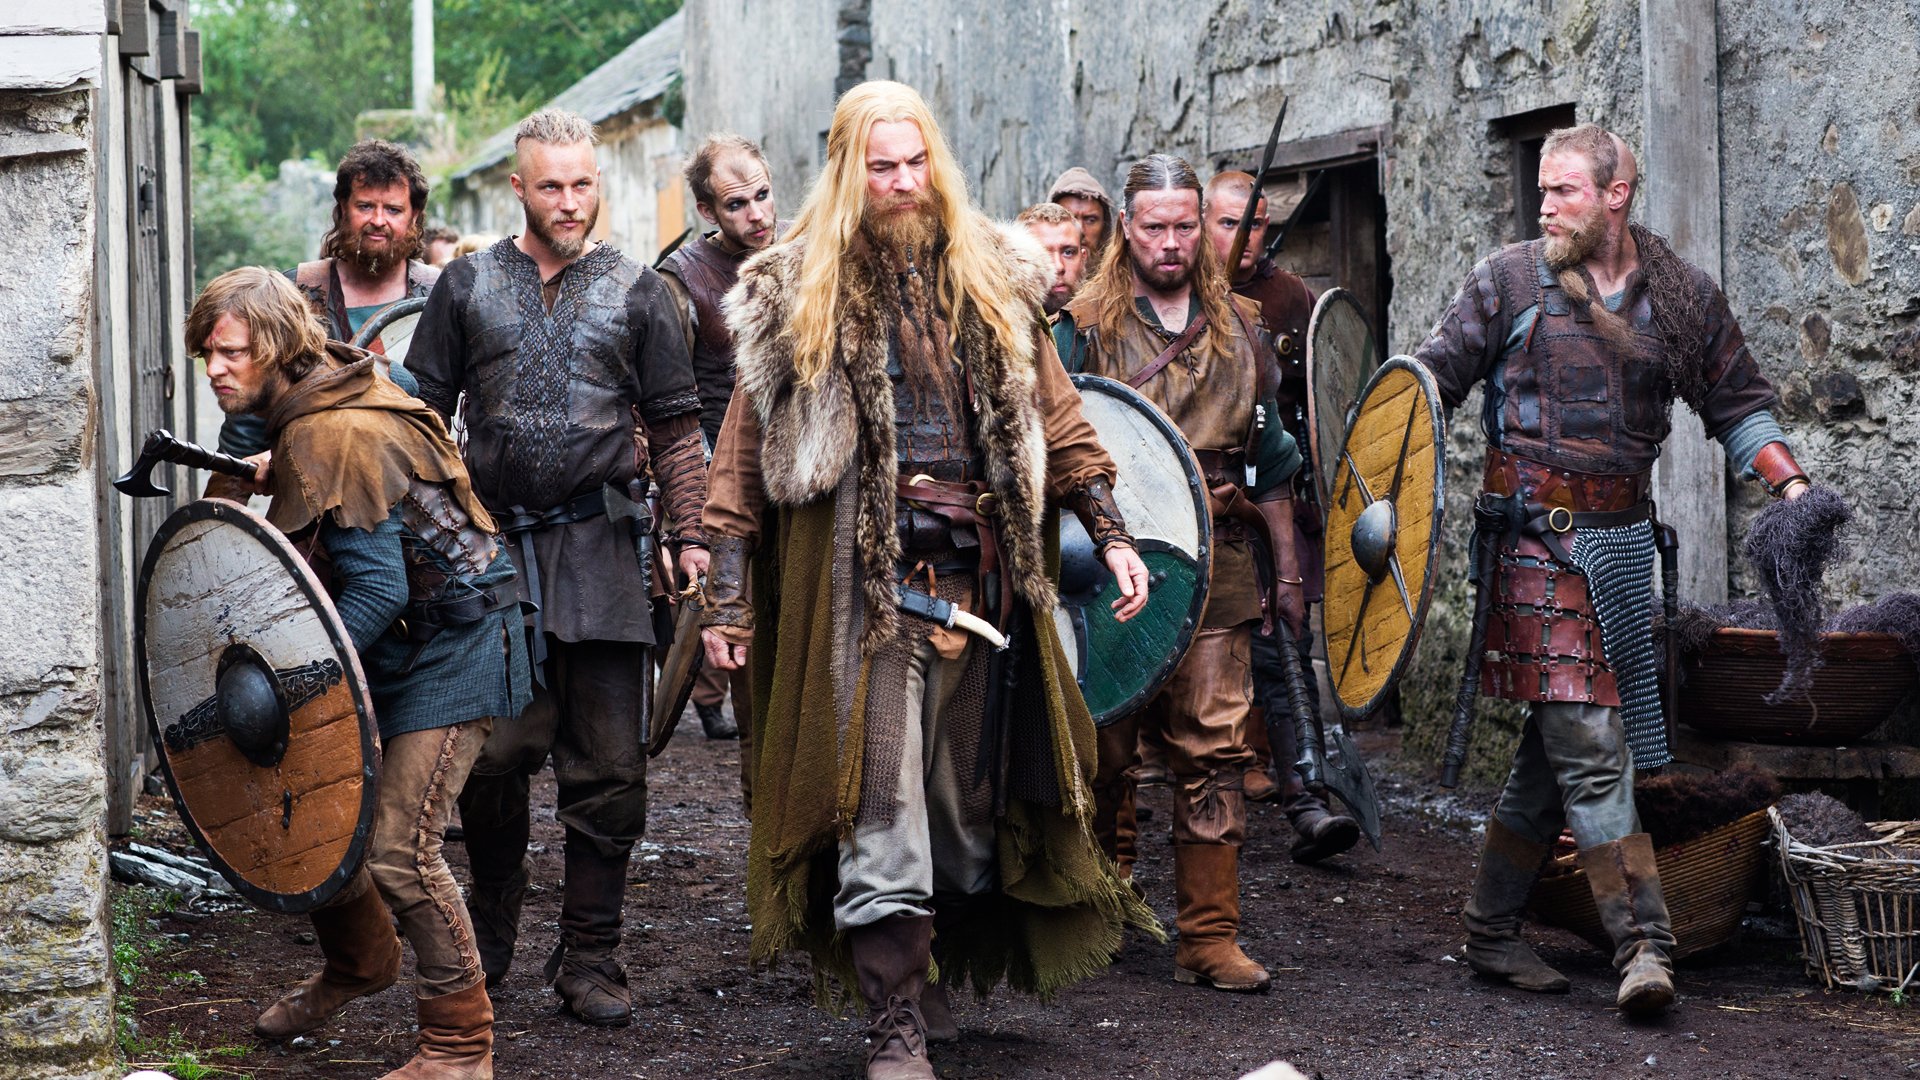 vikings, Action, Drama, History, Fantasy, Adventure, Series, 1vikings, Viking, Warrior Wallpaper